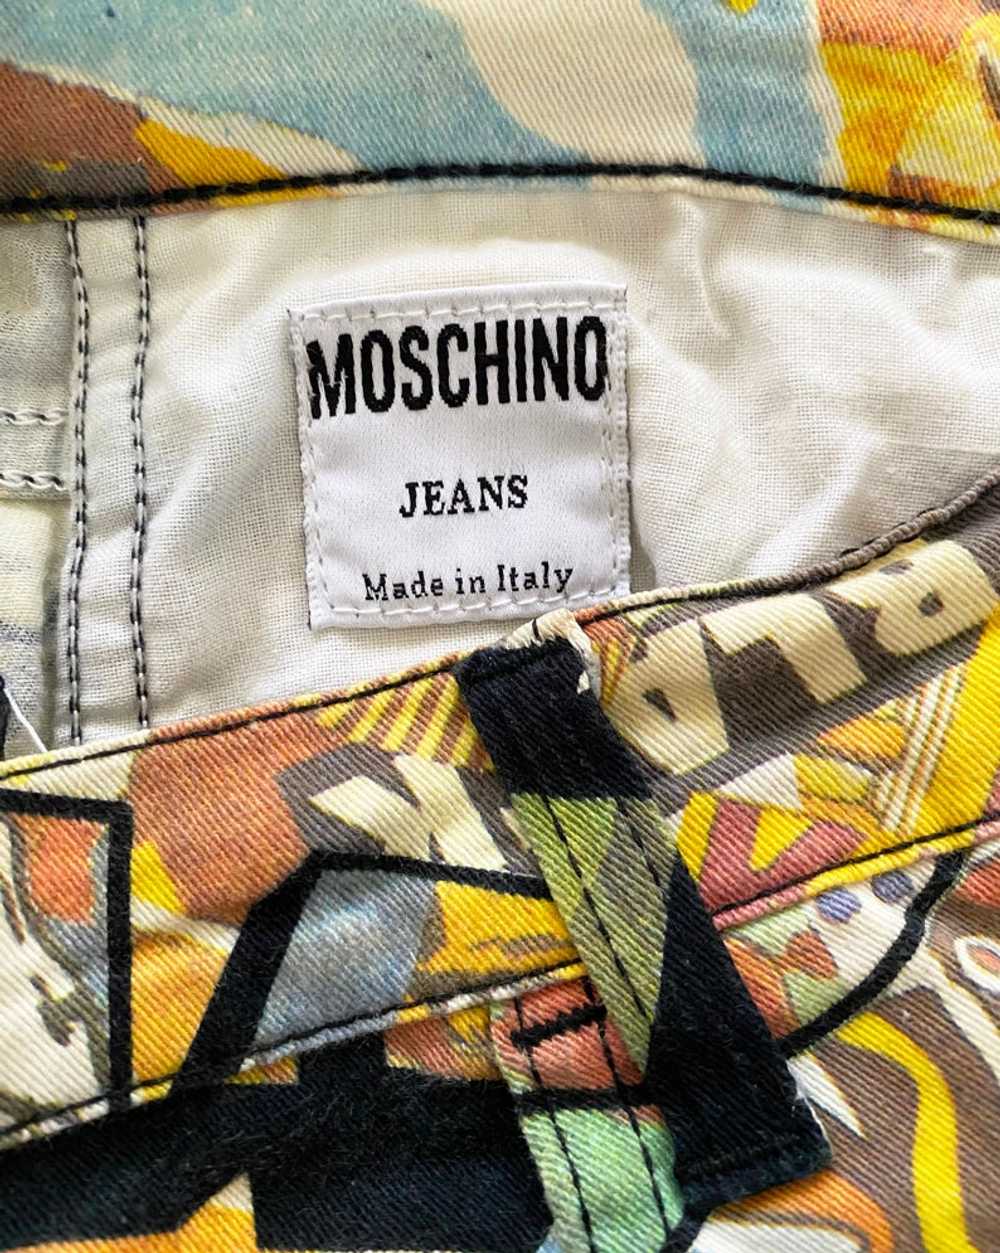 Moschino Rare 1990s Cartoon Print Jeans - image 4